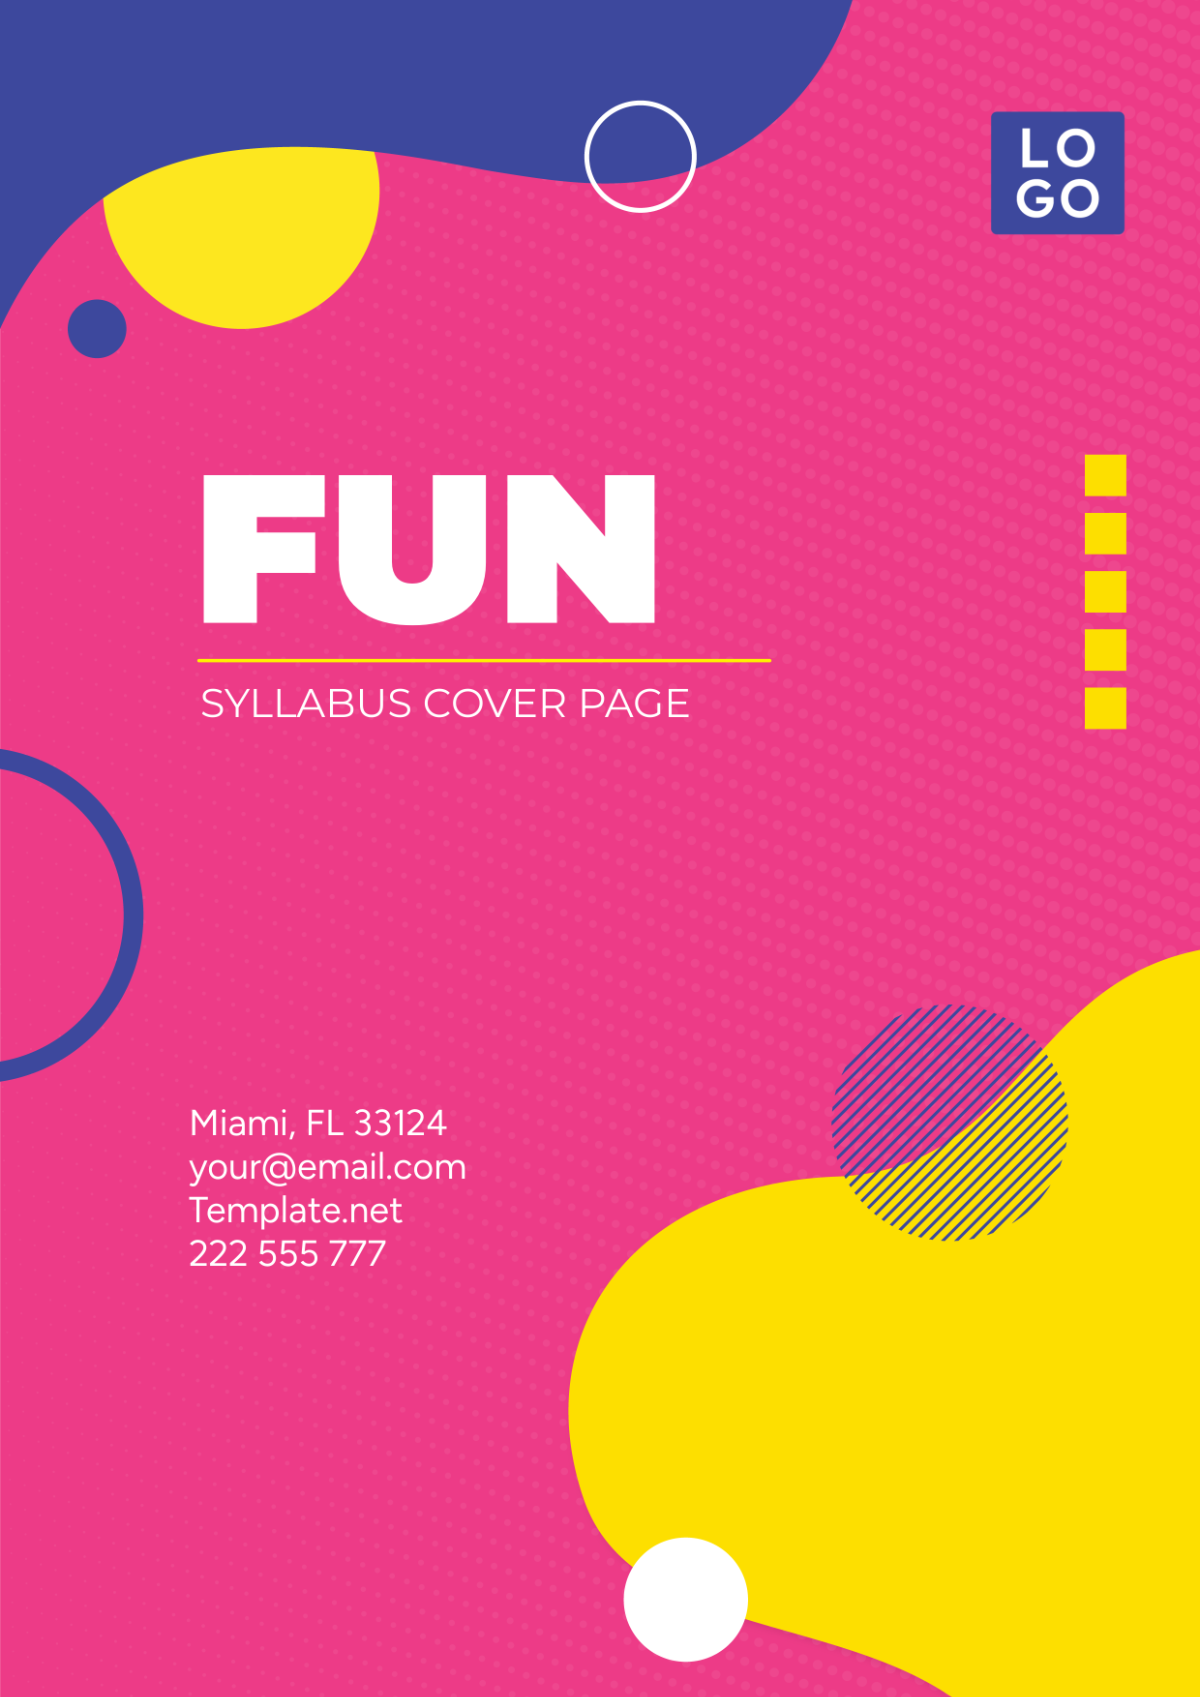 Fun Syllabus Cover Page Template